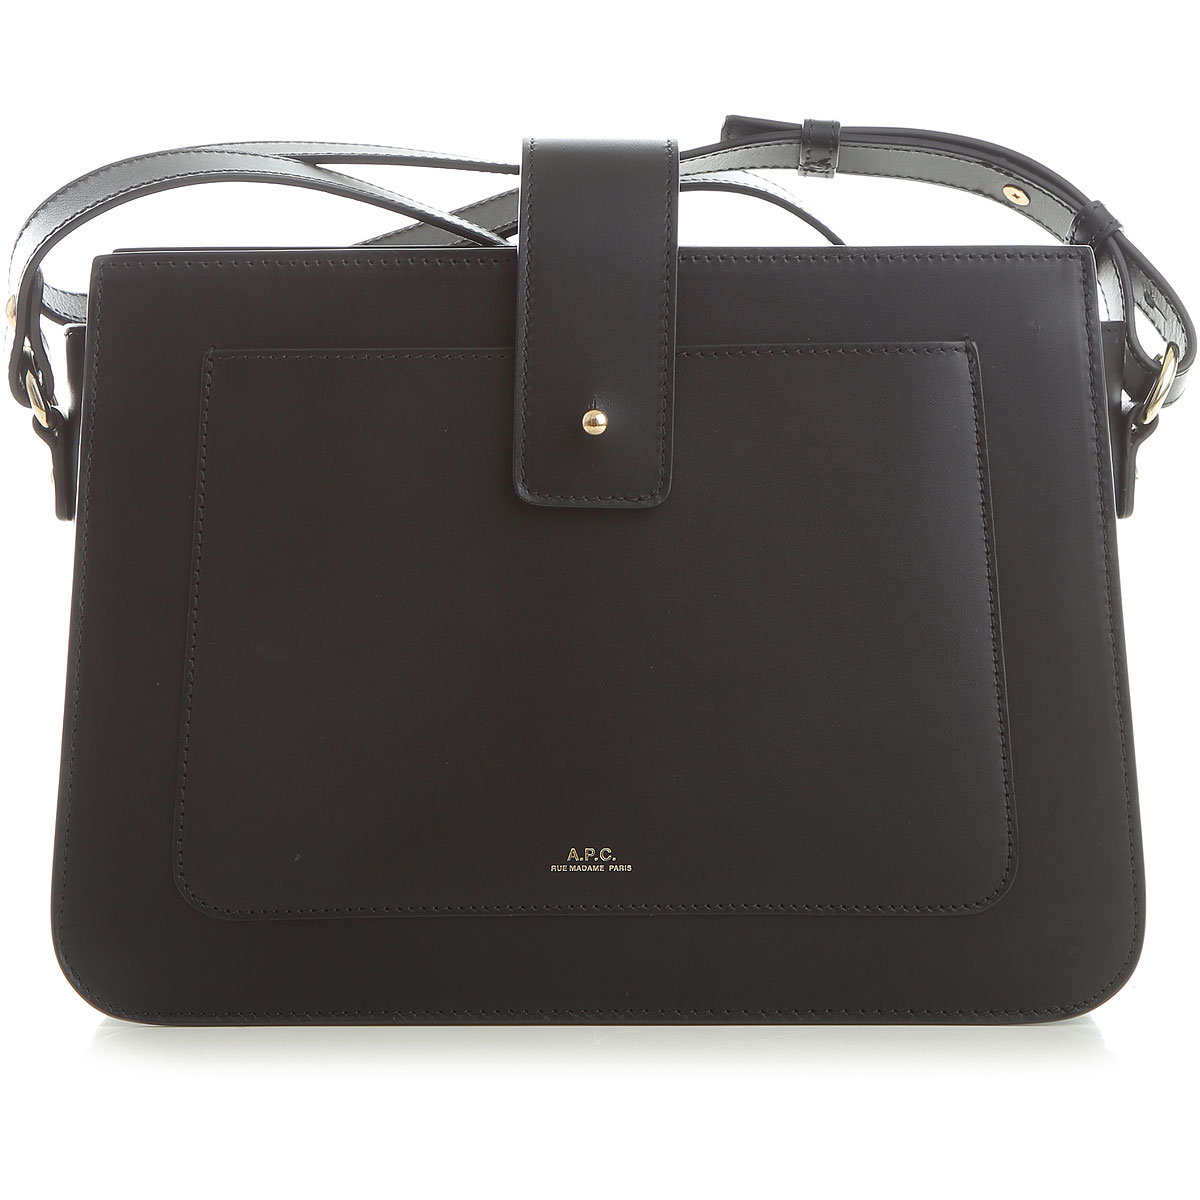 Handbags A.P.C., Style code: pxawv-f61172-lzz